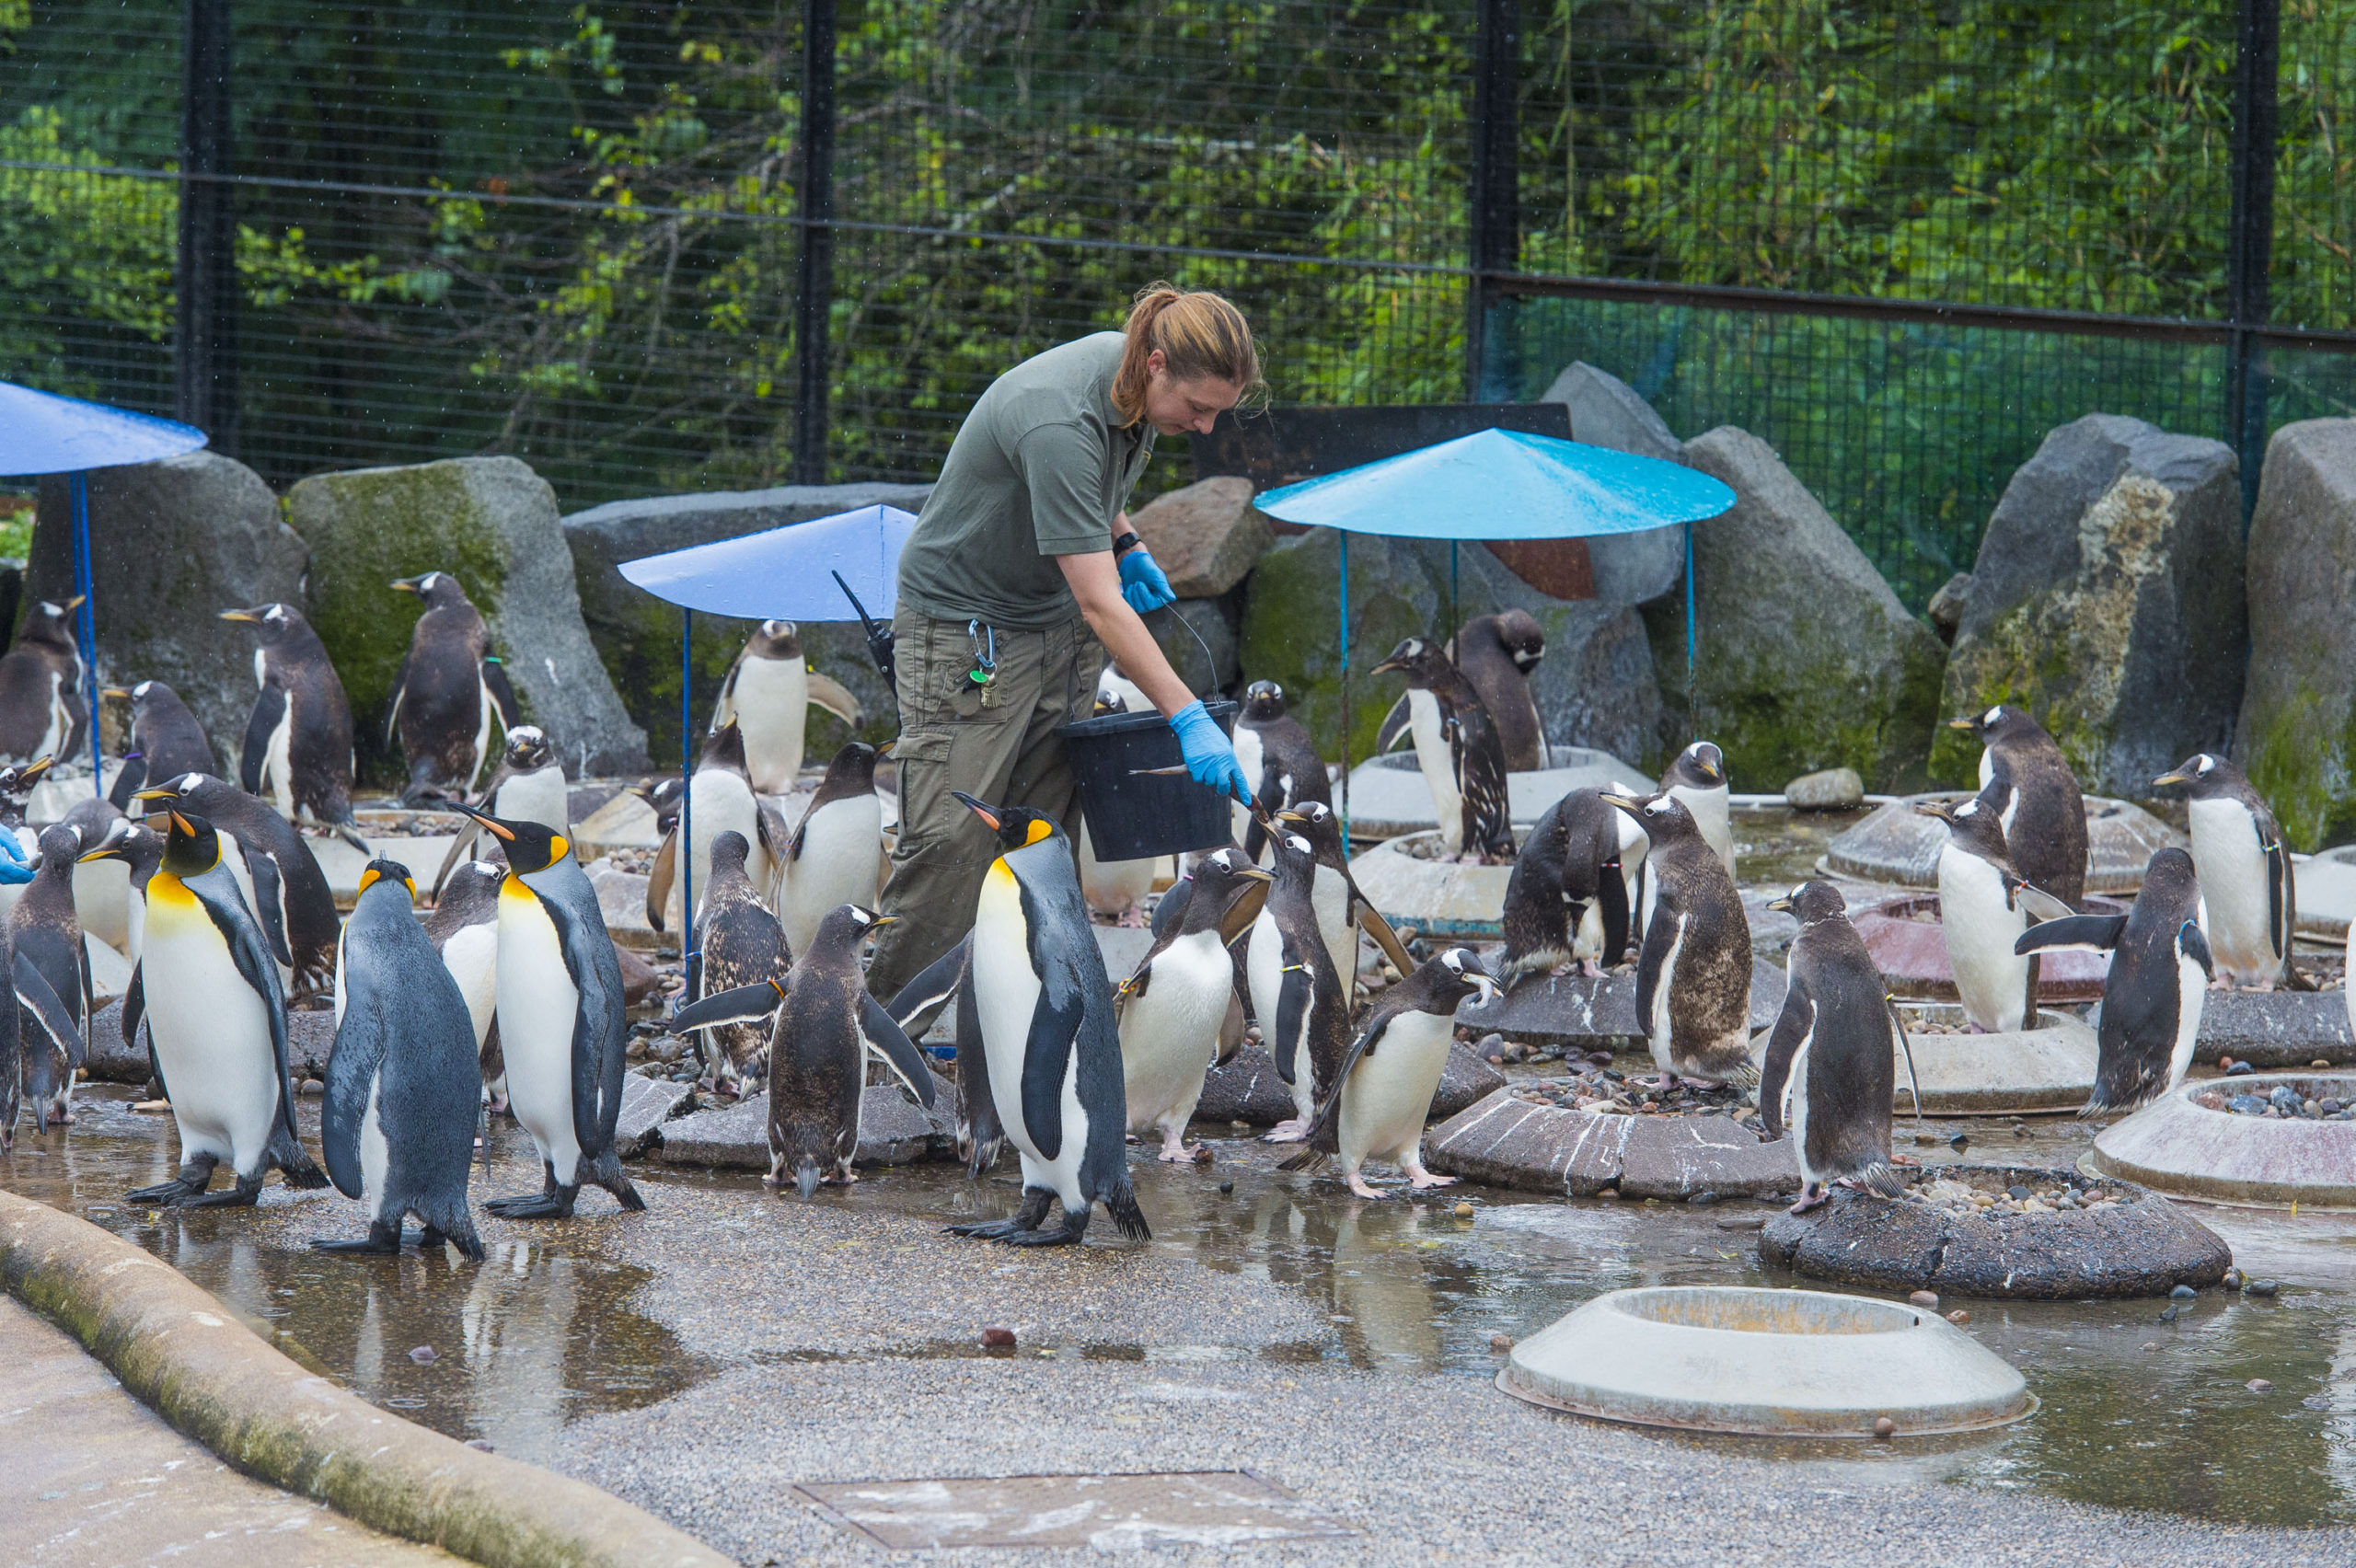 Feeding time for the penguins.